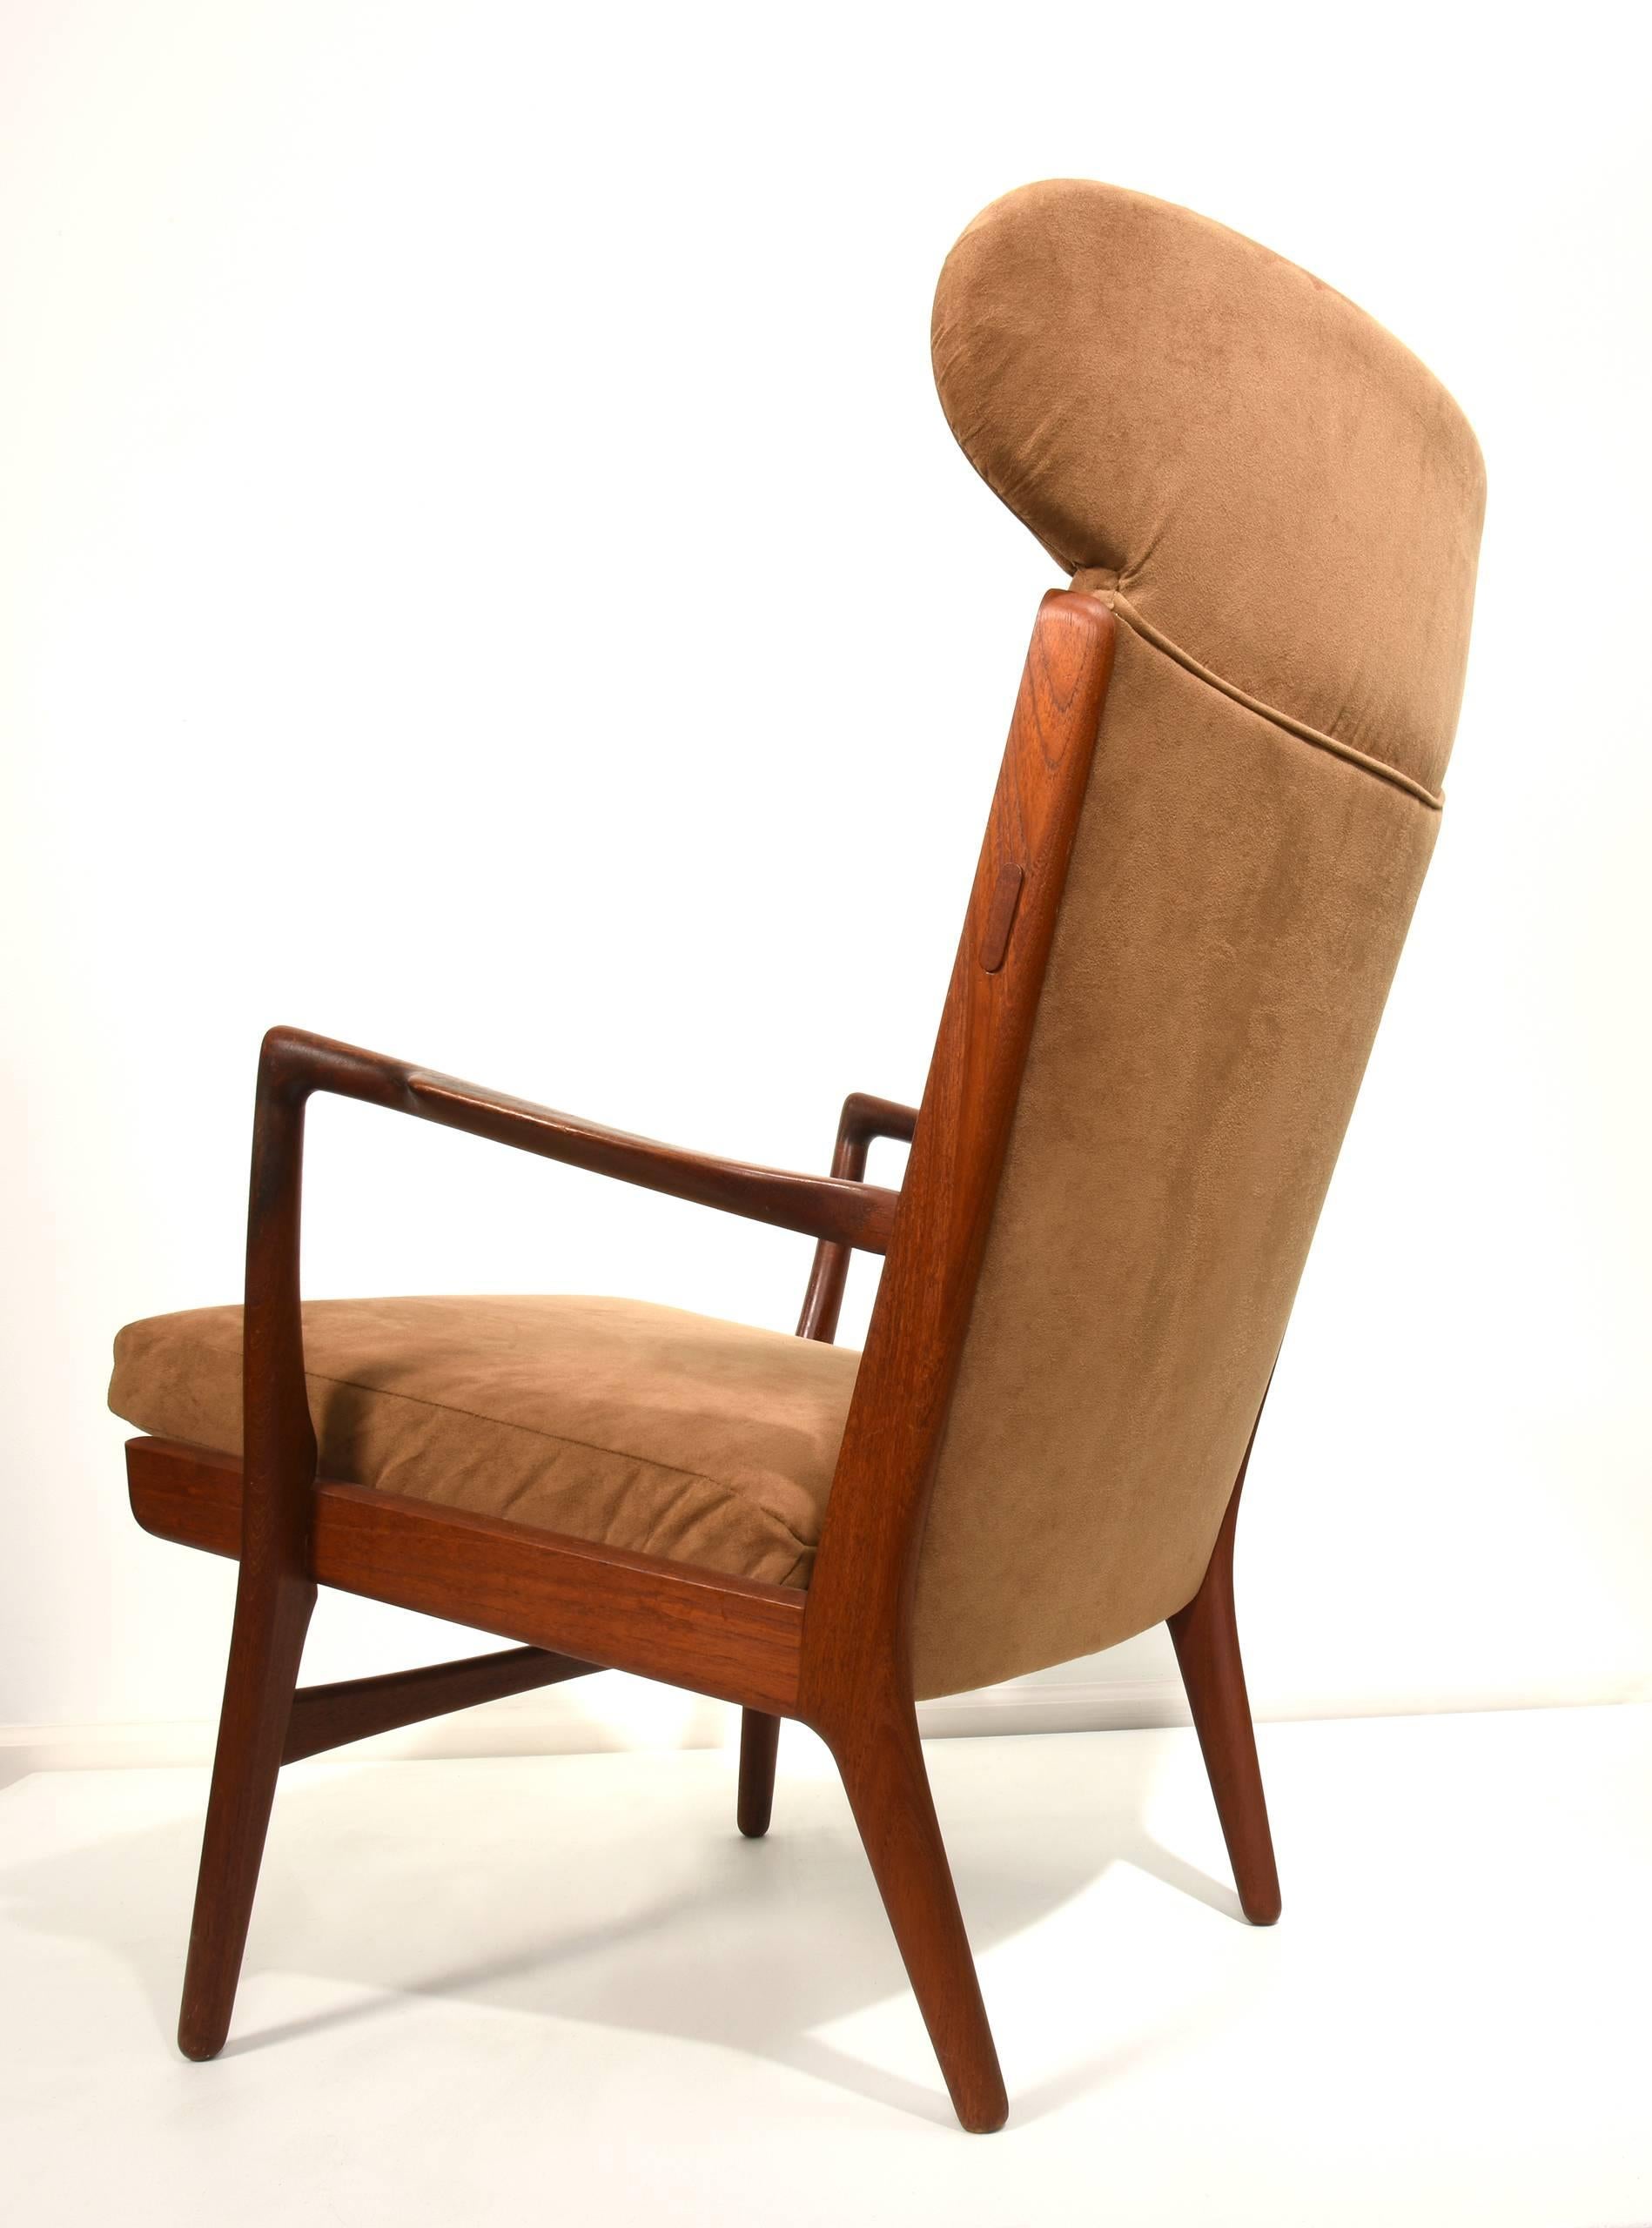 AP-15 highback armchair by Hans J. Wegner for A.P. Stolen

Denmark, 1951
Manufactured by A.P. Stolen

Teak

Measures: 30 D x 28.25 W x 40 H.